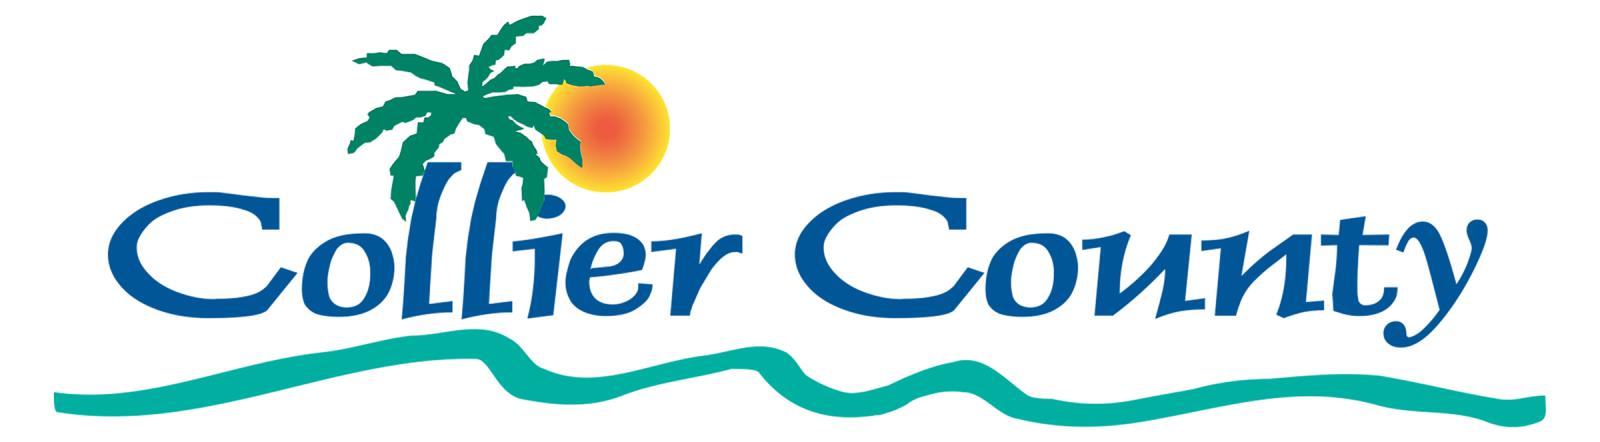 2 inch Color Collier County Logo 1200 dpi